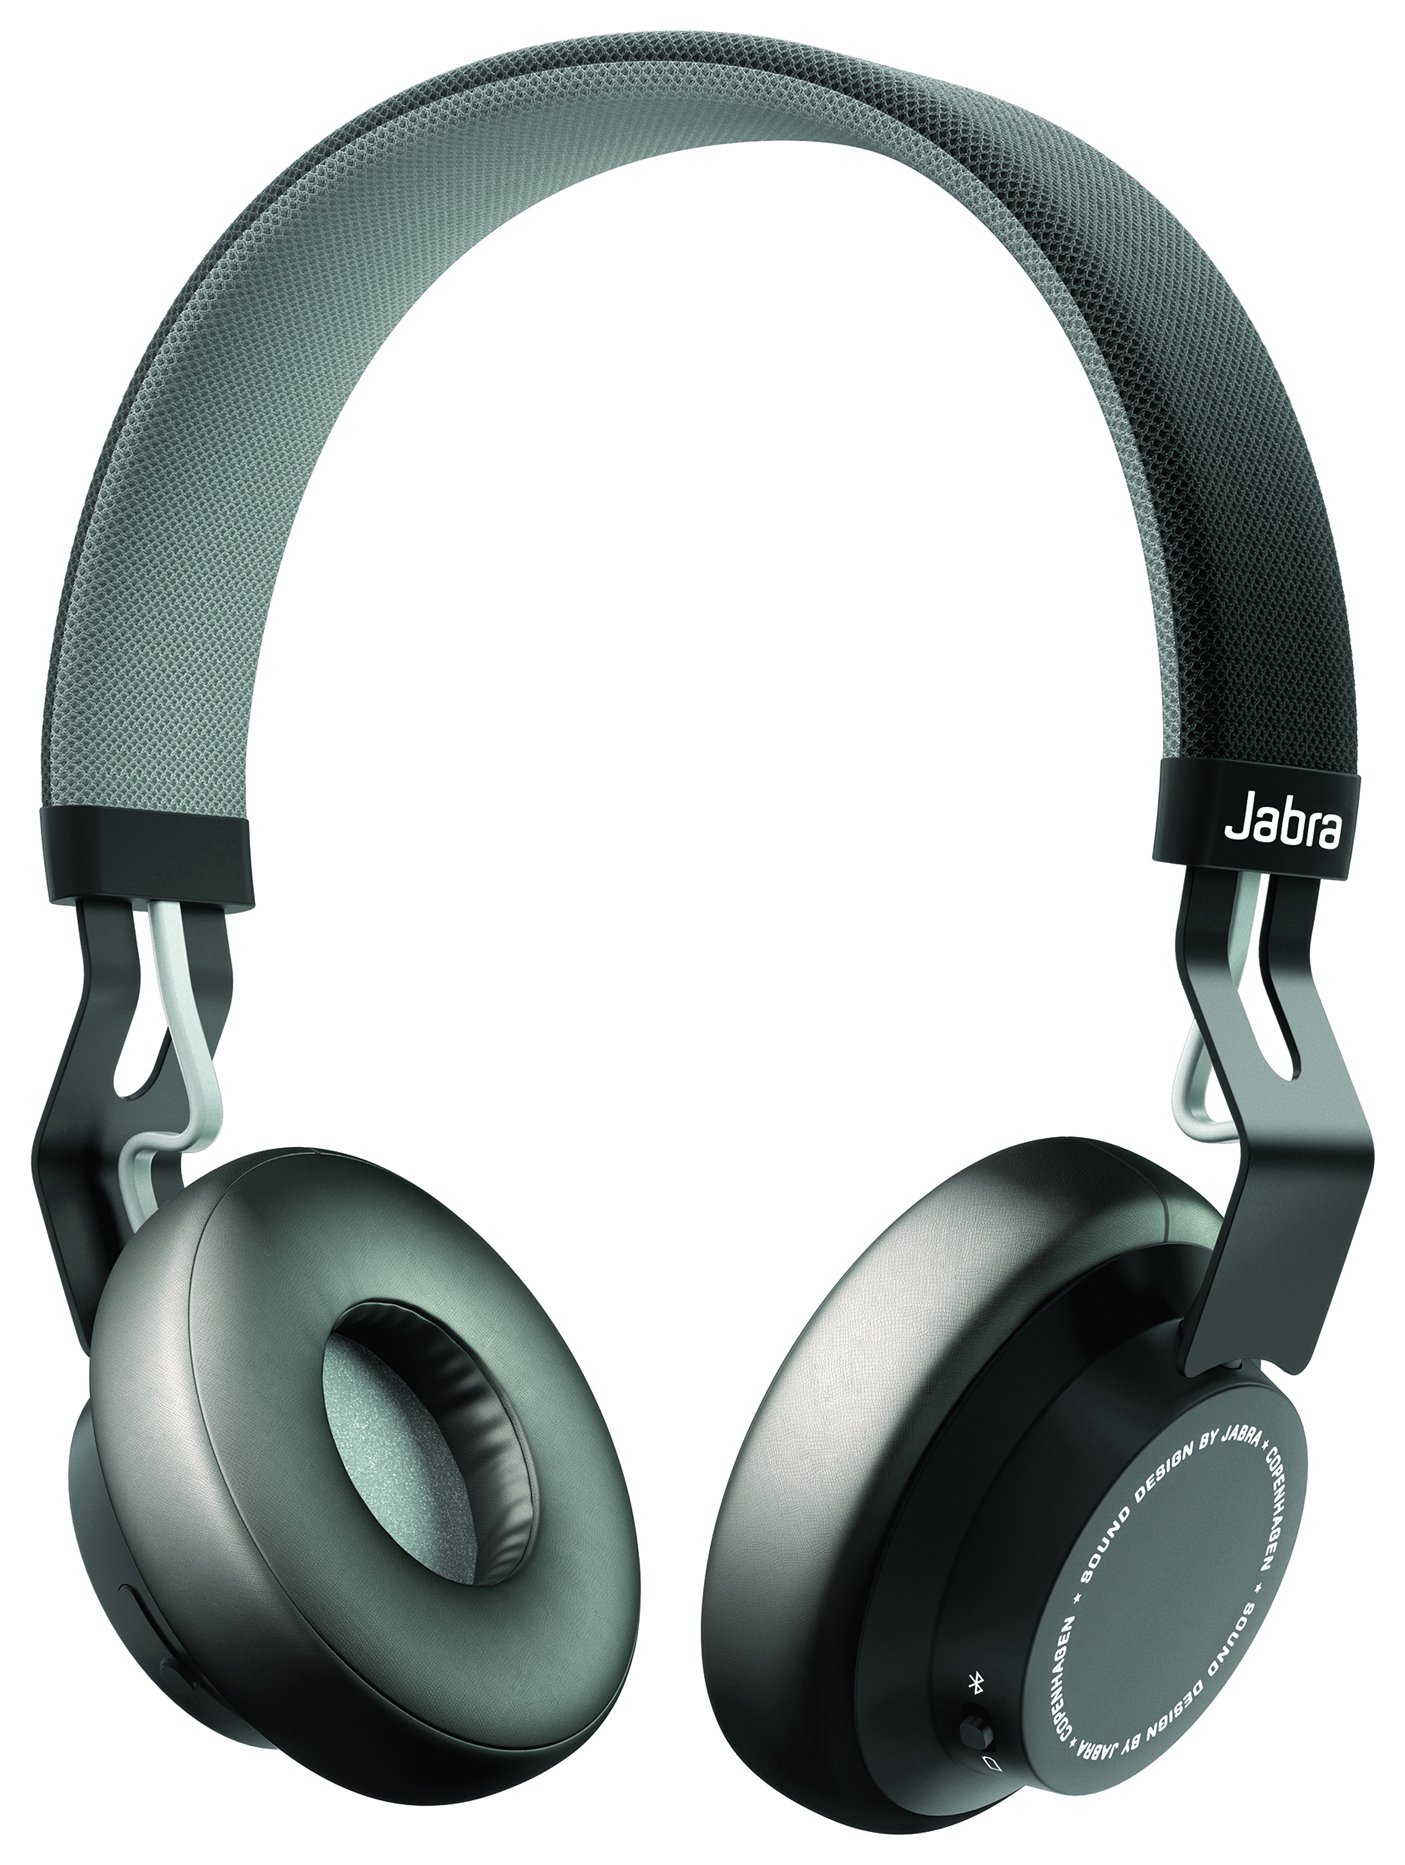 Jabra Move On-Ear Wireless Headphones - Black.